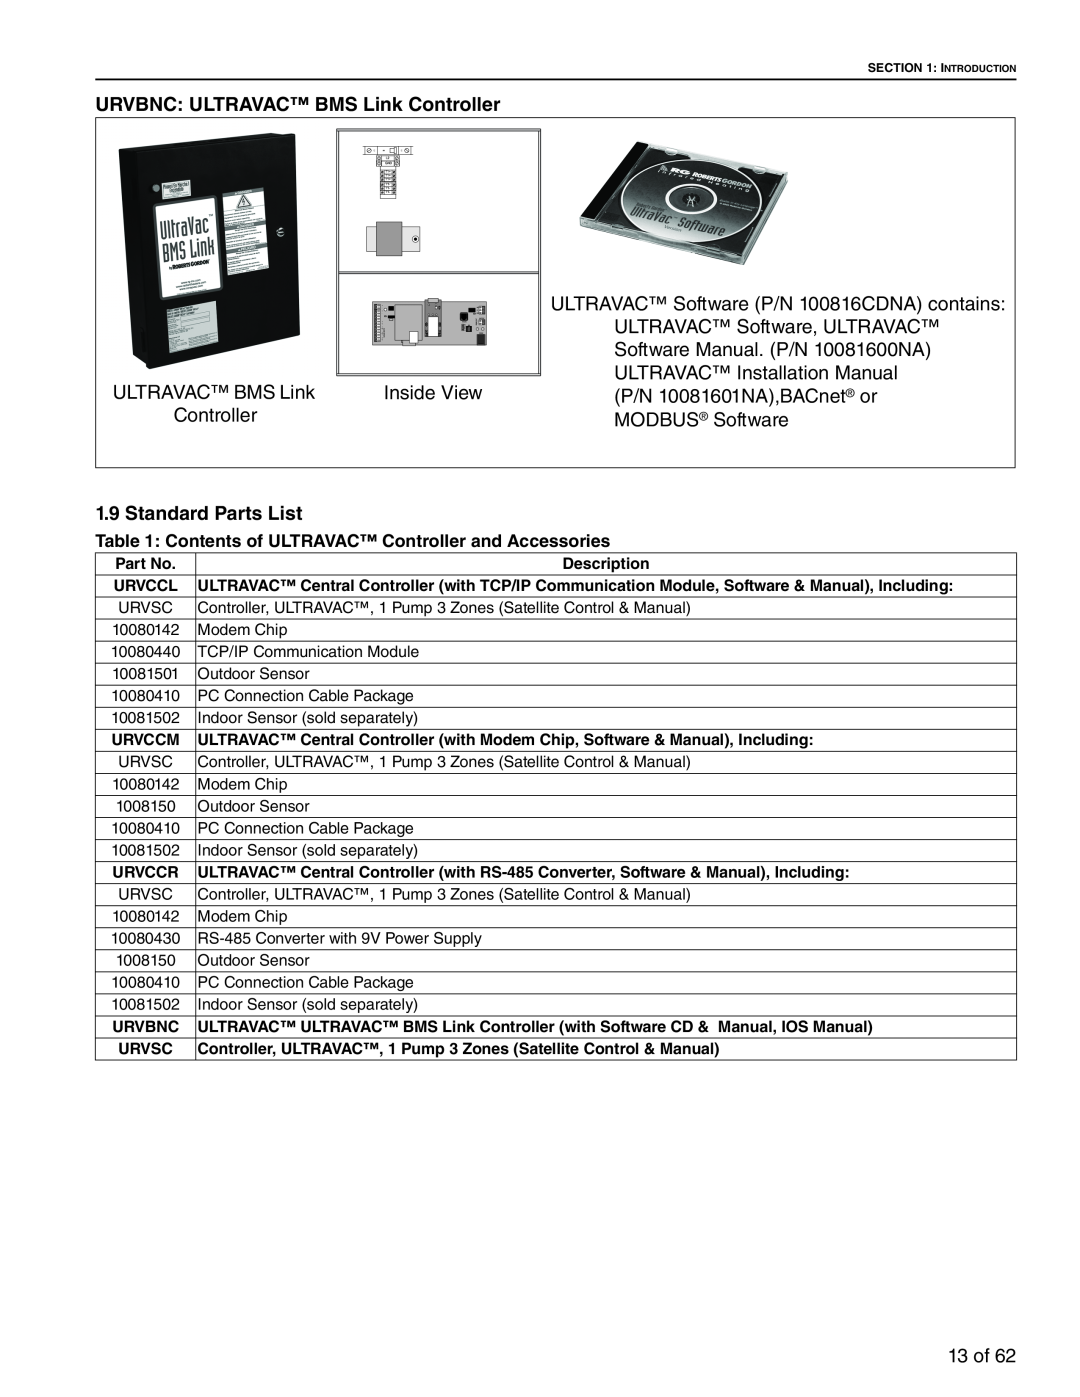 Roberts Gorden 10081601NA Rev H 12/11 URVBNC: ULTRAVAC BMS Link Controller, Standard Parts List, Inside View, 13 of 